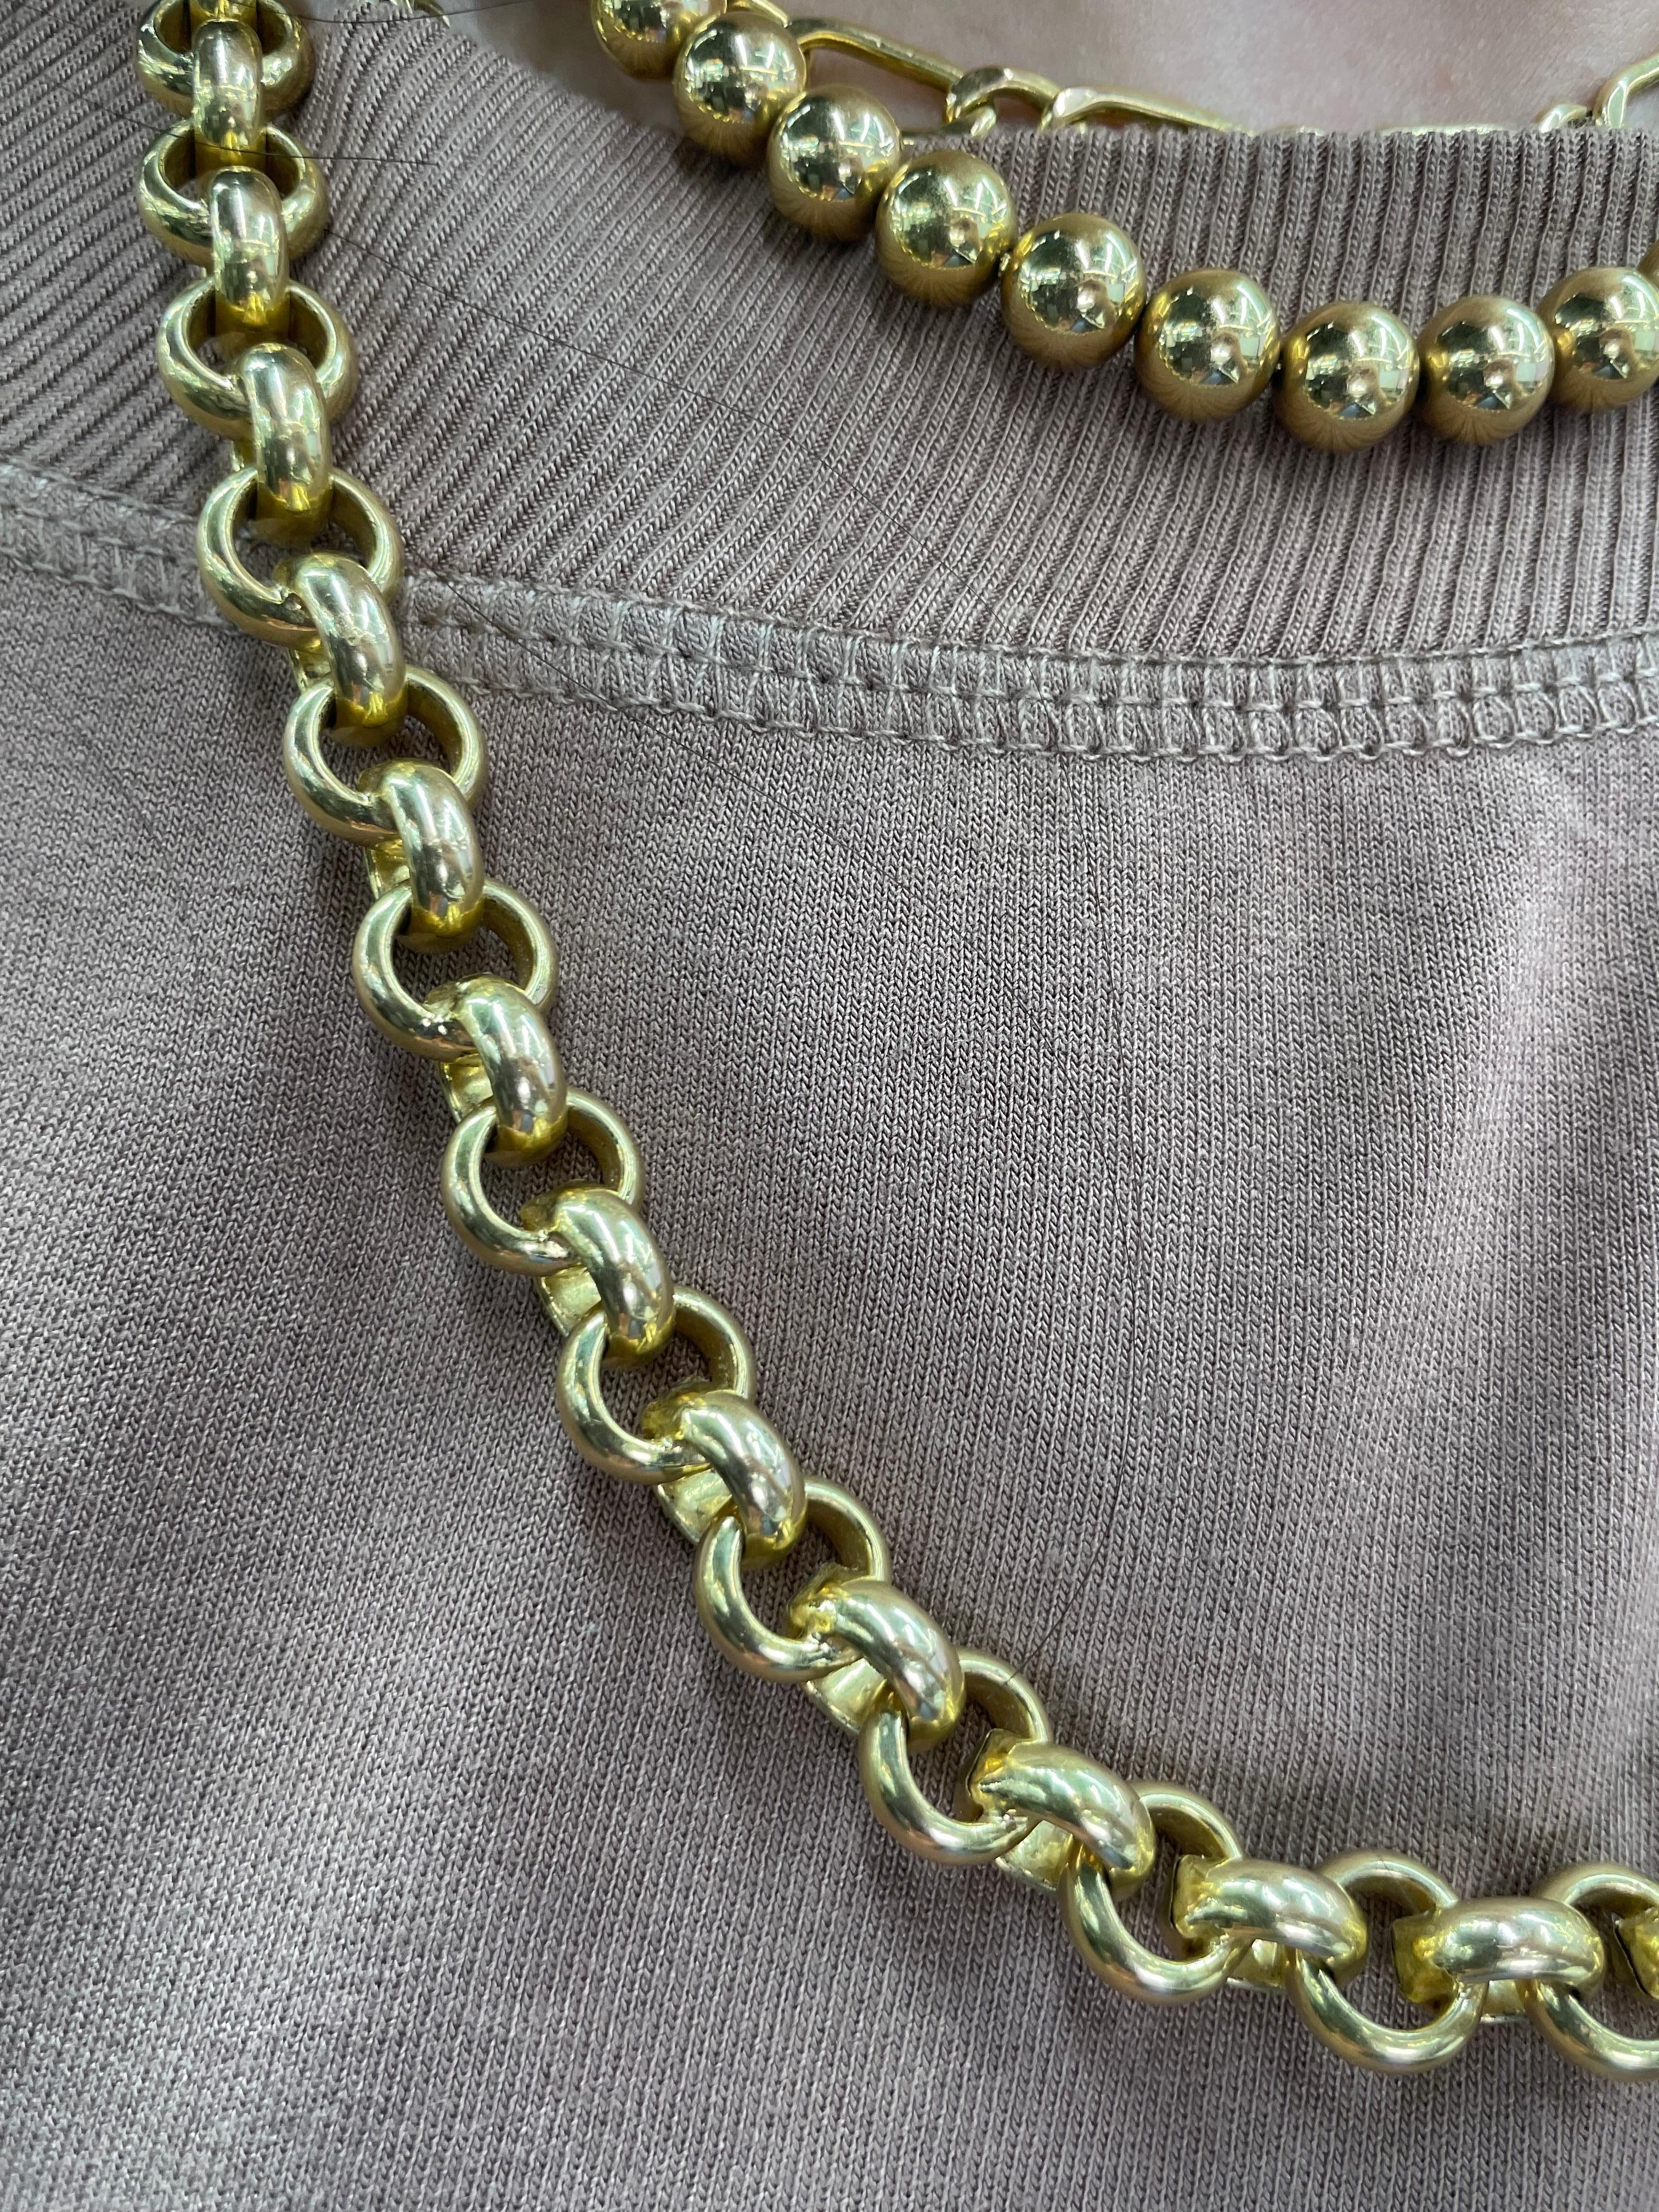 UnoAErre 14 Karat Yellow Gold Rolo Link Necklace Bracelet 68.9 Grams Italy For Sale 6